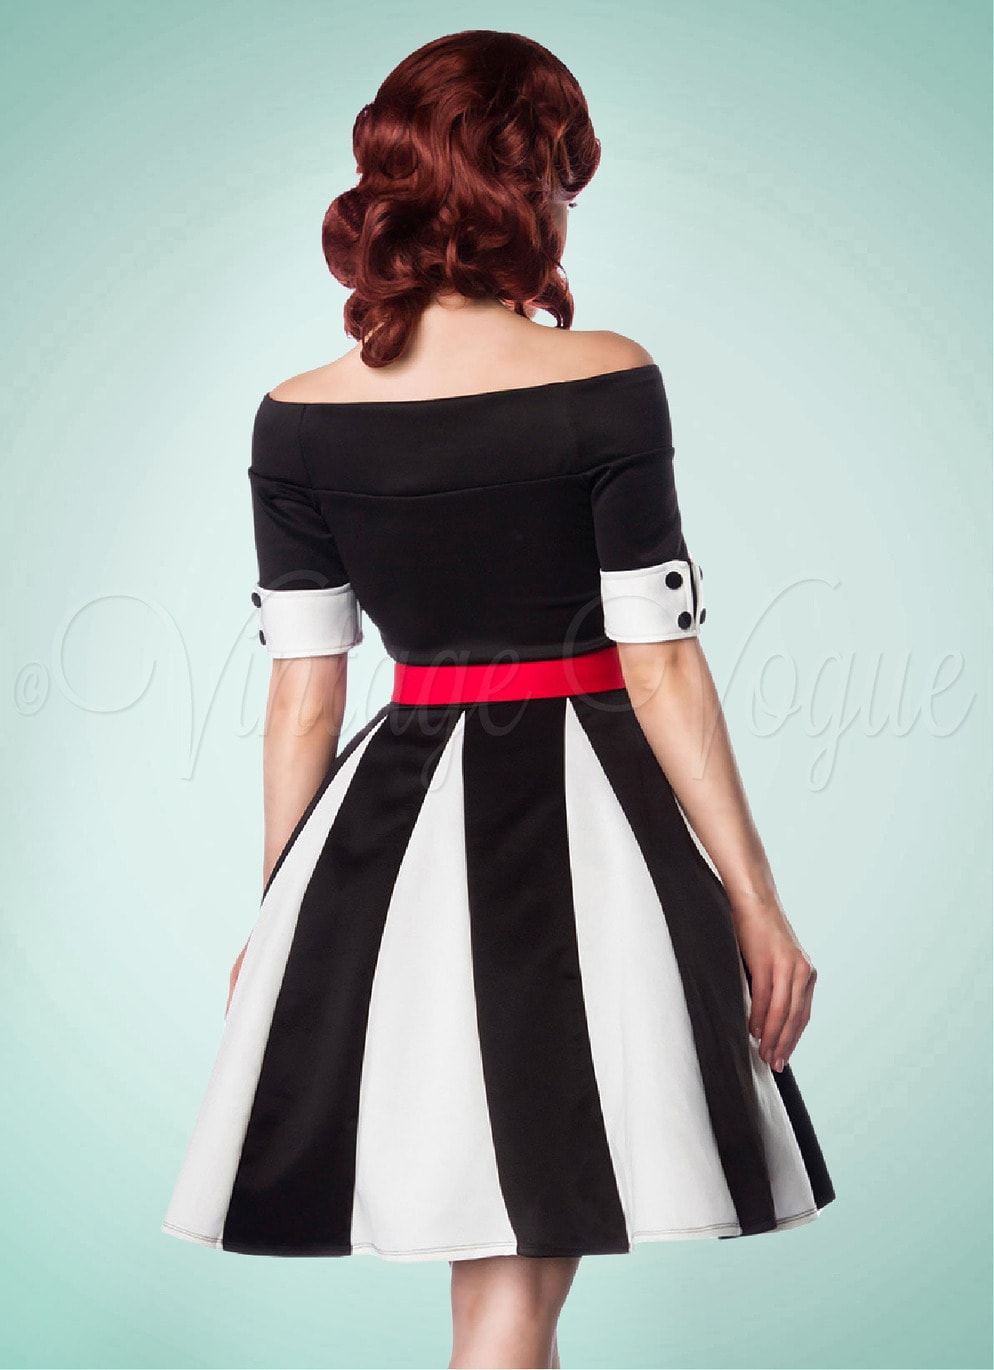 Belsira 50er Jahre Retro Rockabilly 2-Tone Swing Kleid in Schwarz Weiß 50er Jahre Petticoat Damenkleid Dress Jive Lindy Hop Damen Kleid